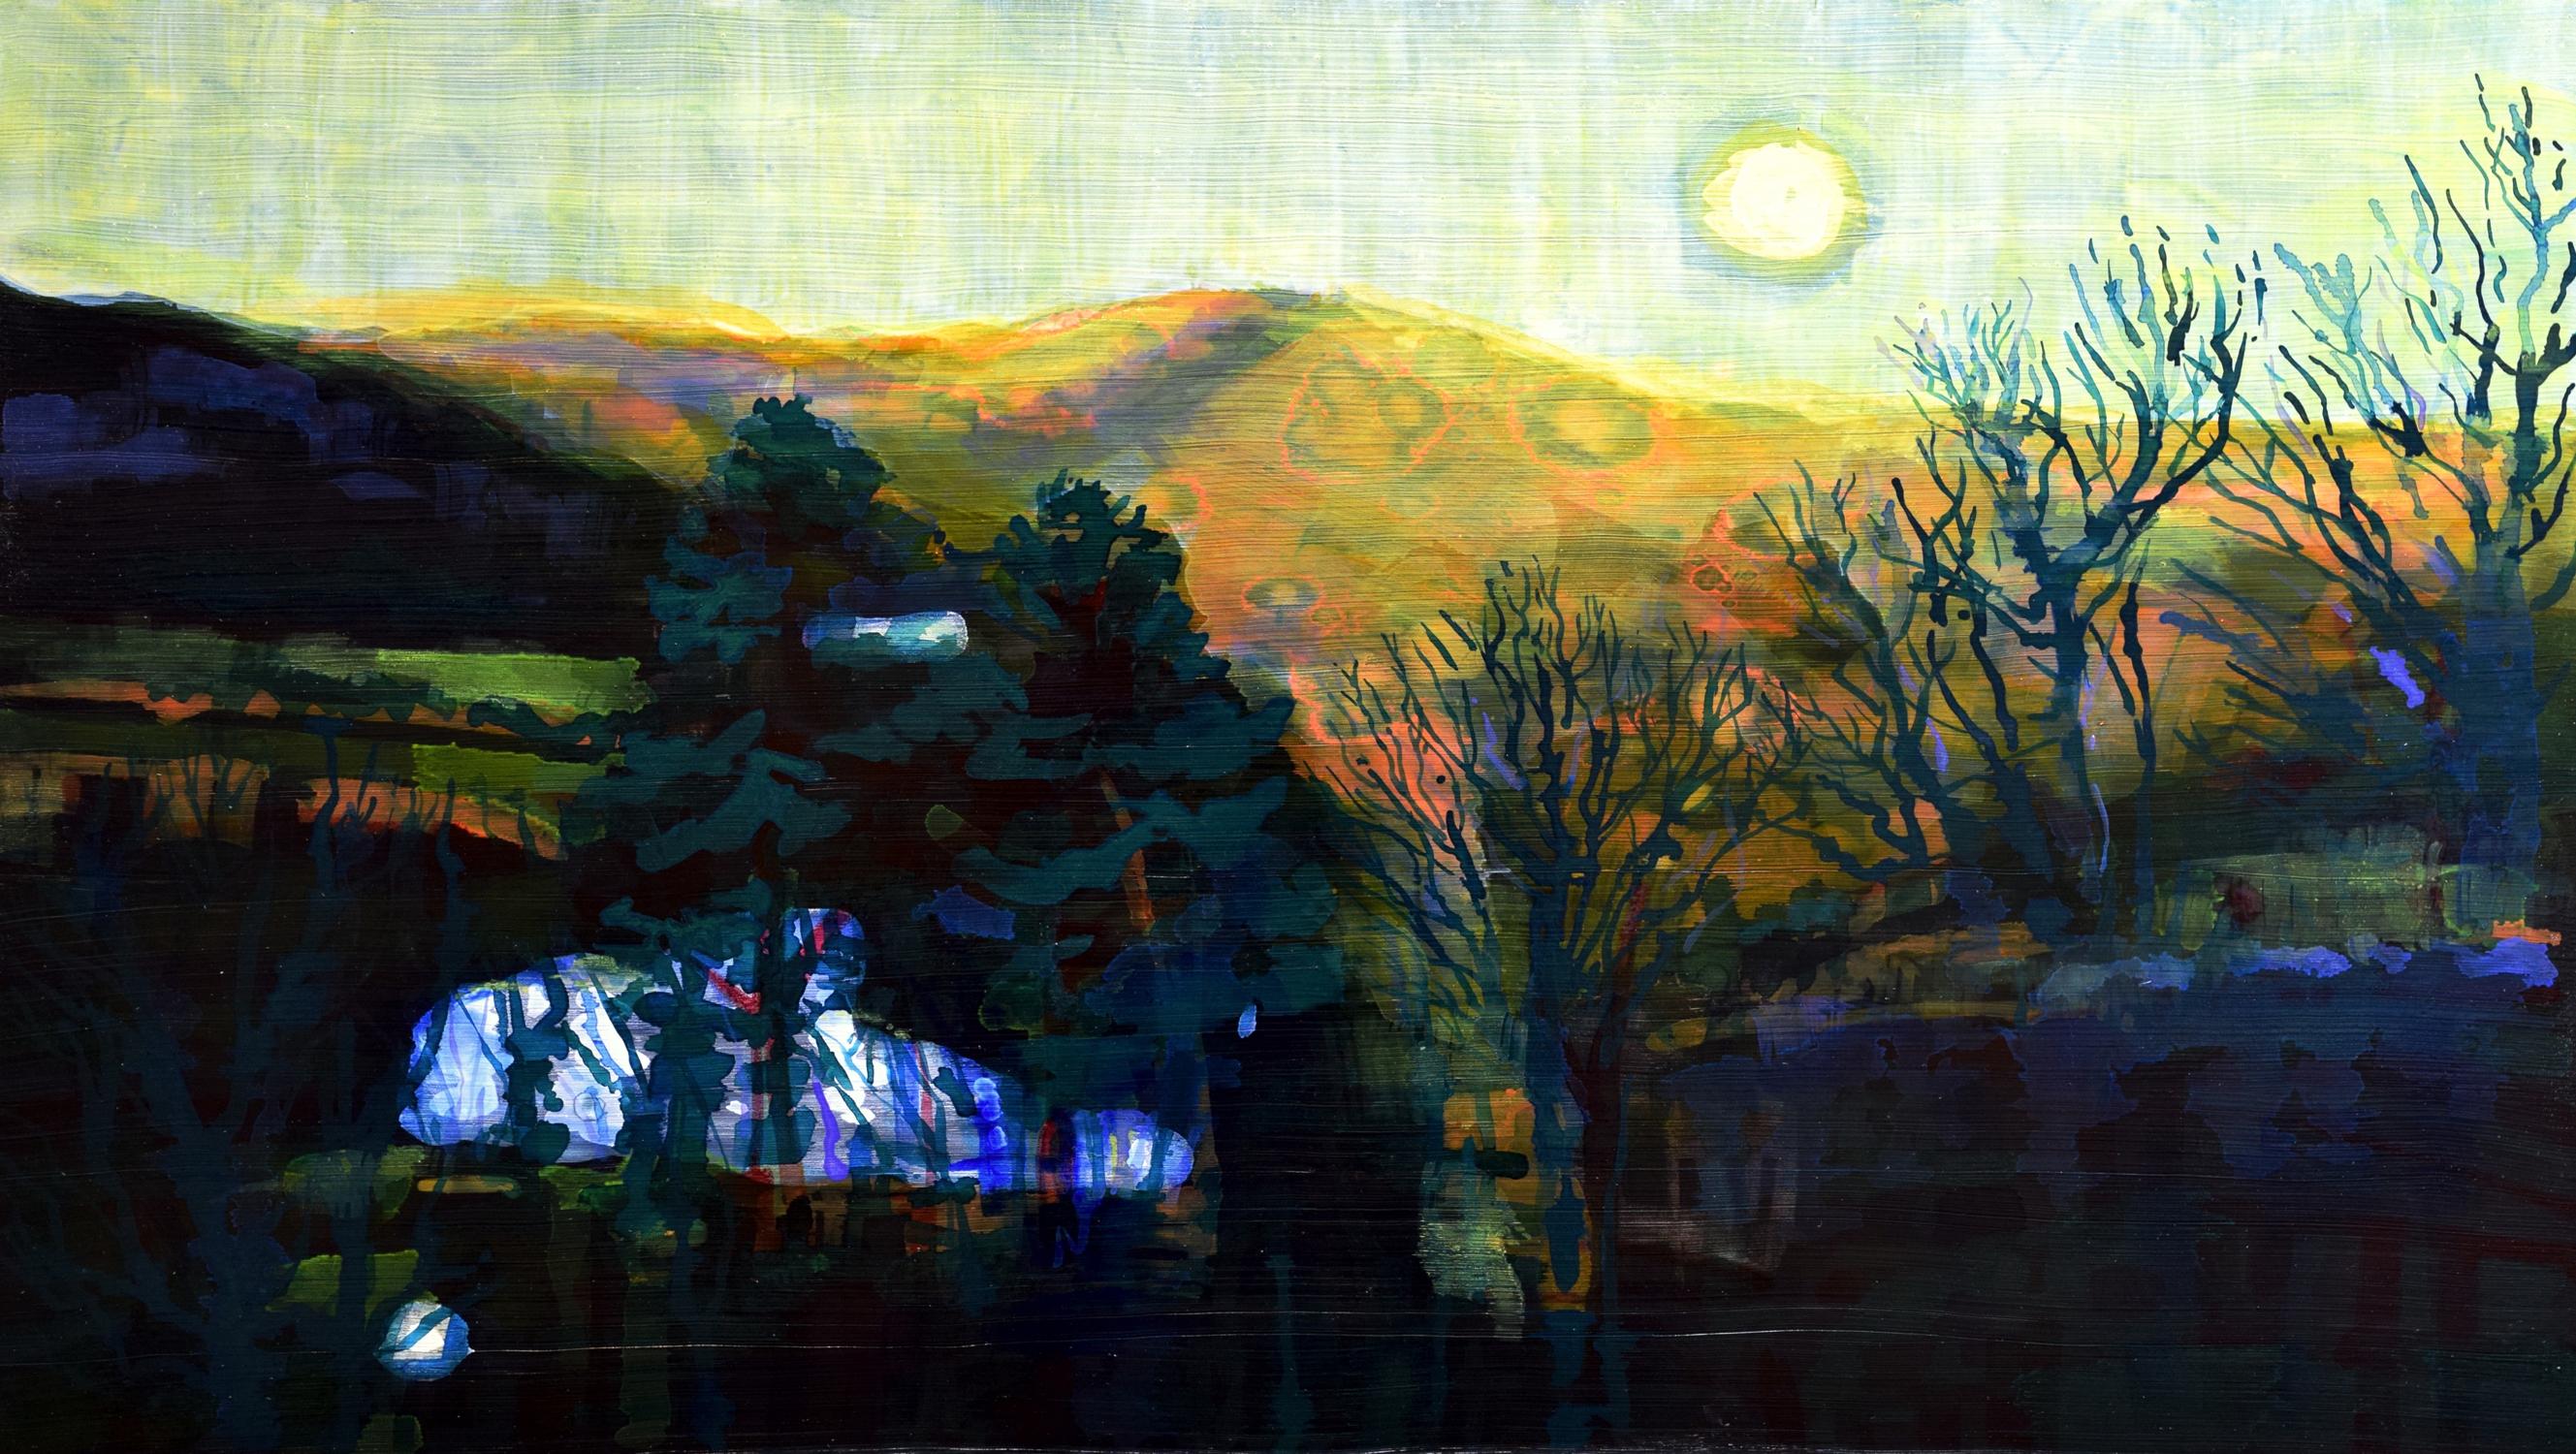 Andrew Francis Landscape Painting - "Pont Ceri Sunset I". Contemporary Landscape Oil Painting